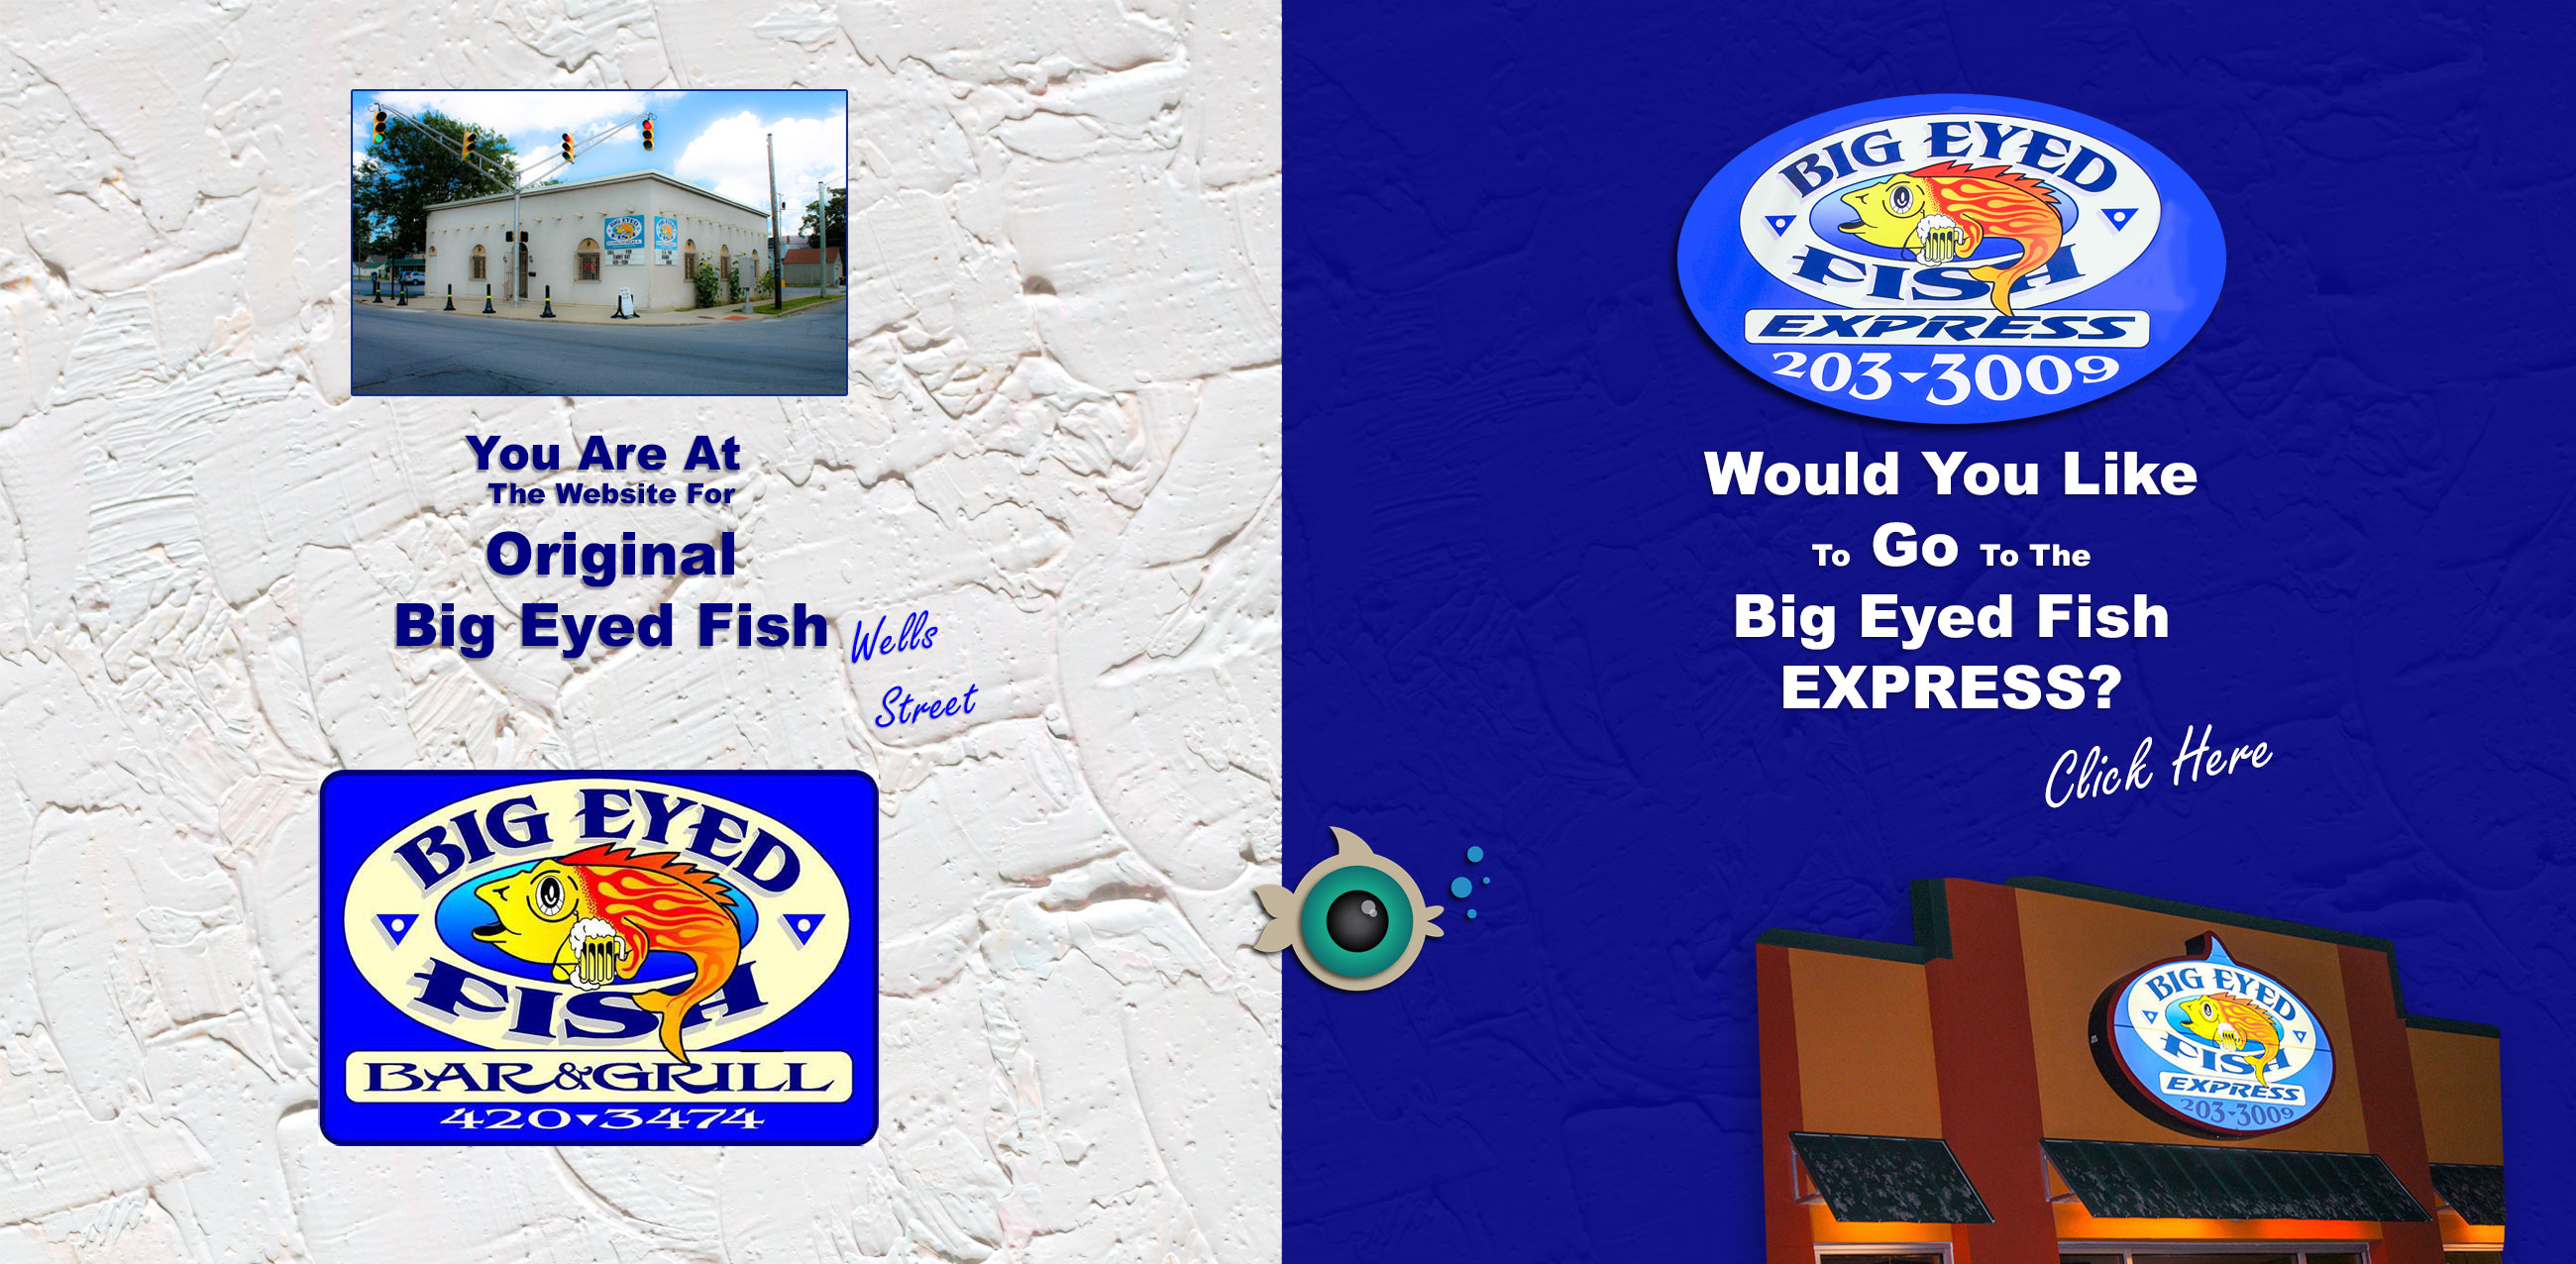 2 Big Eye Fish Locations